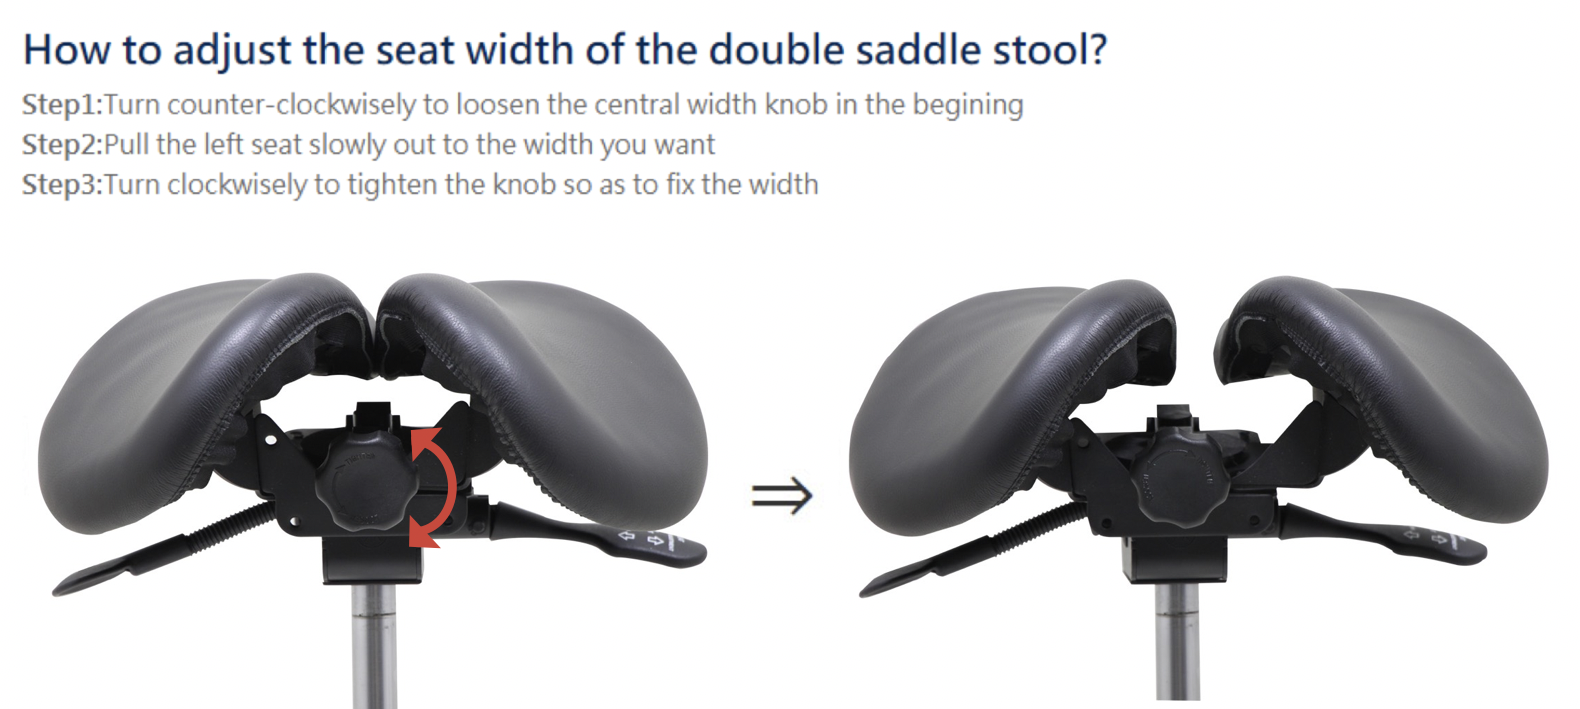 Twin Saddle stool